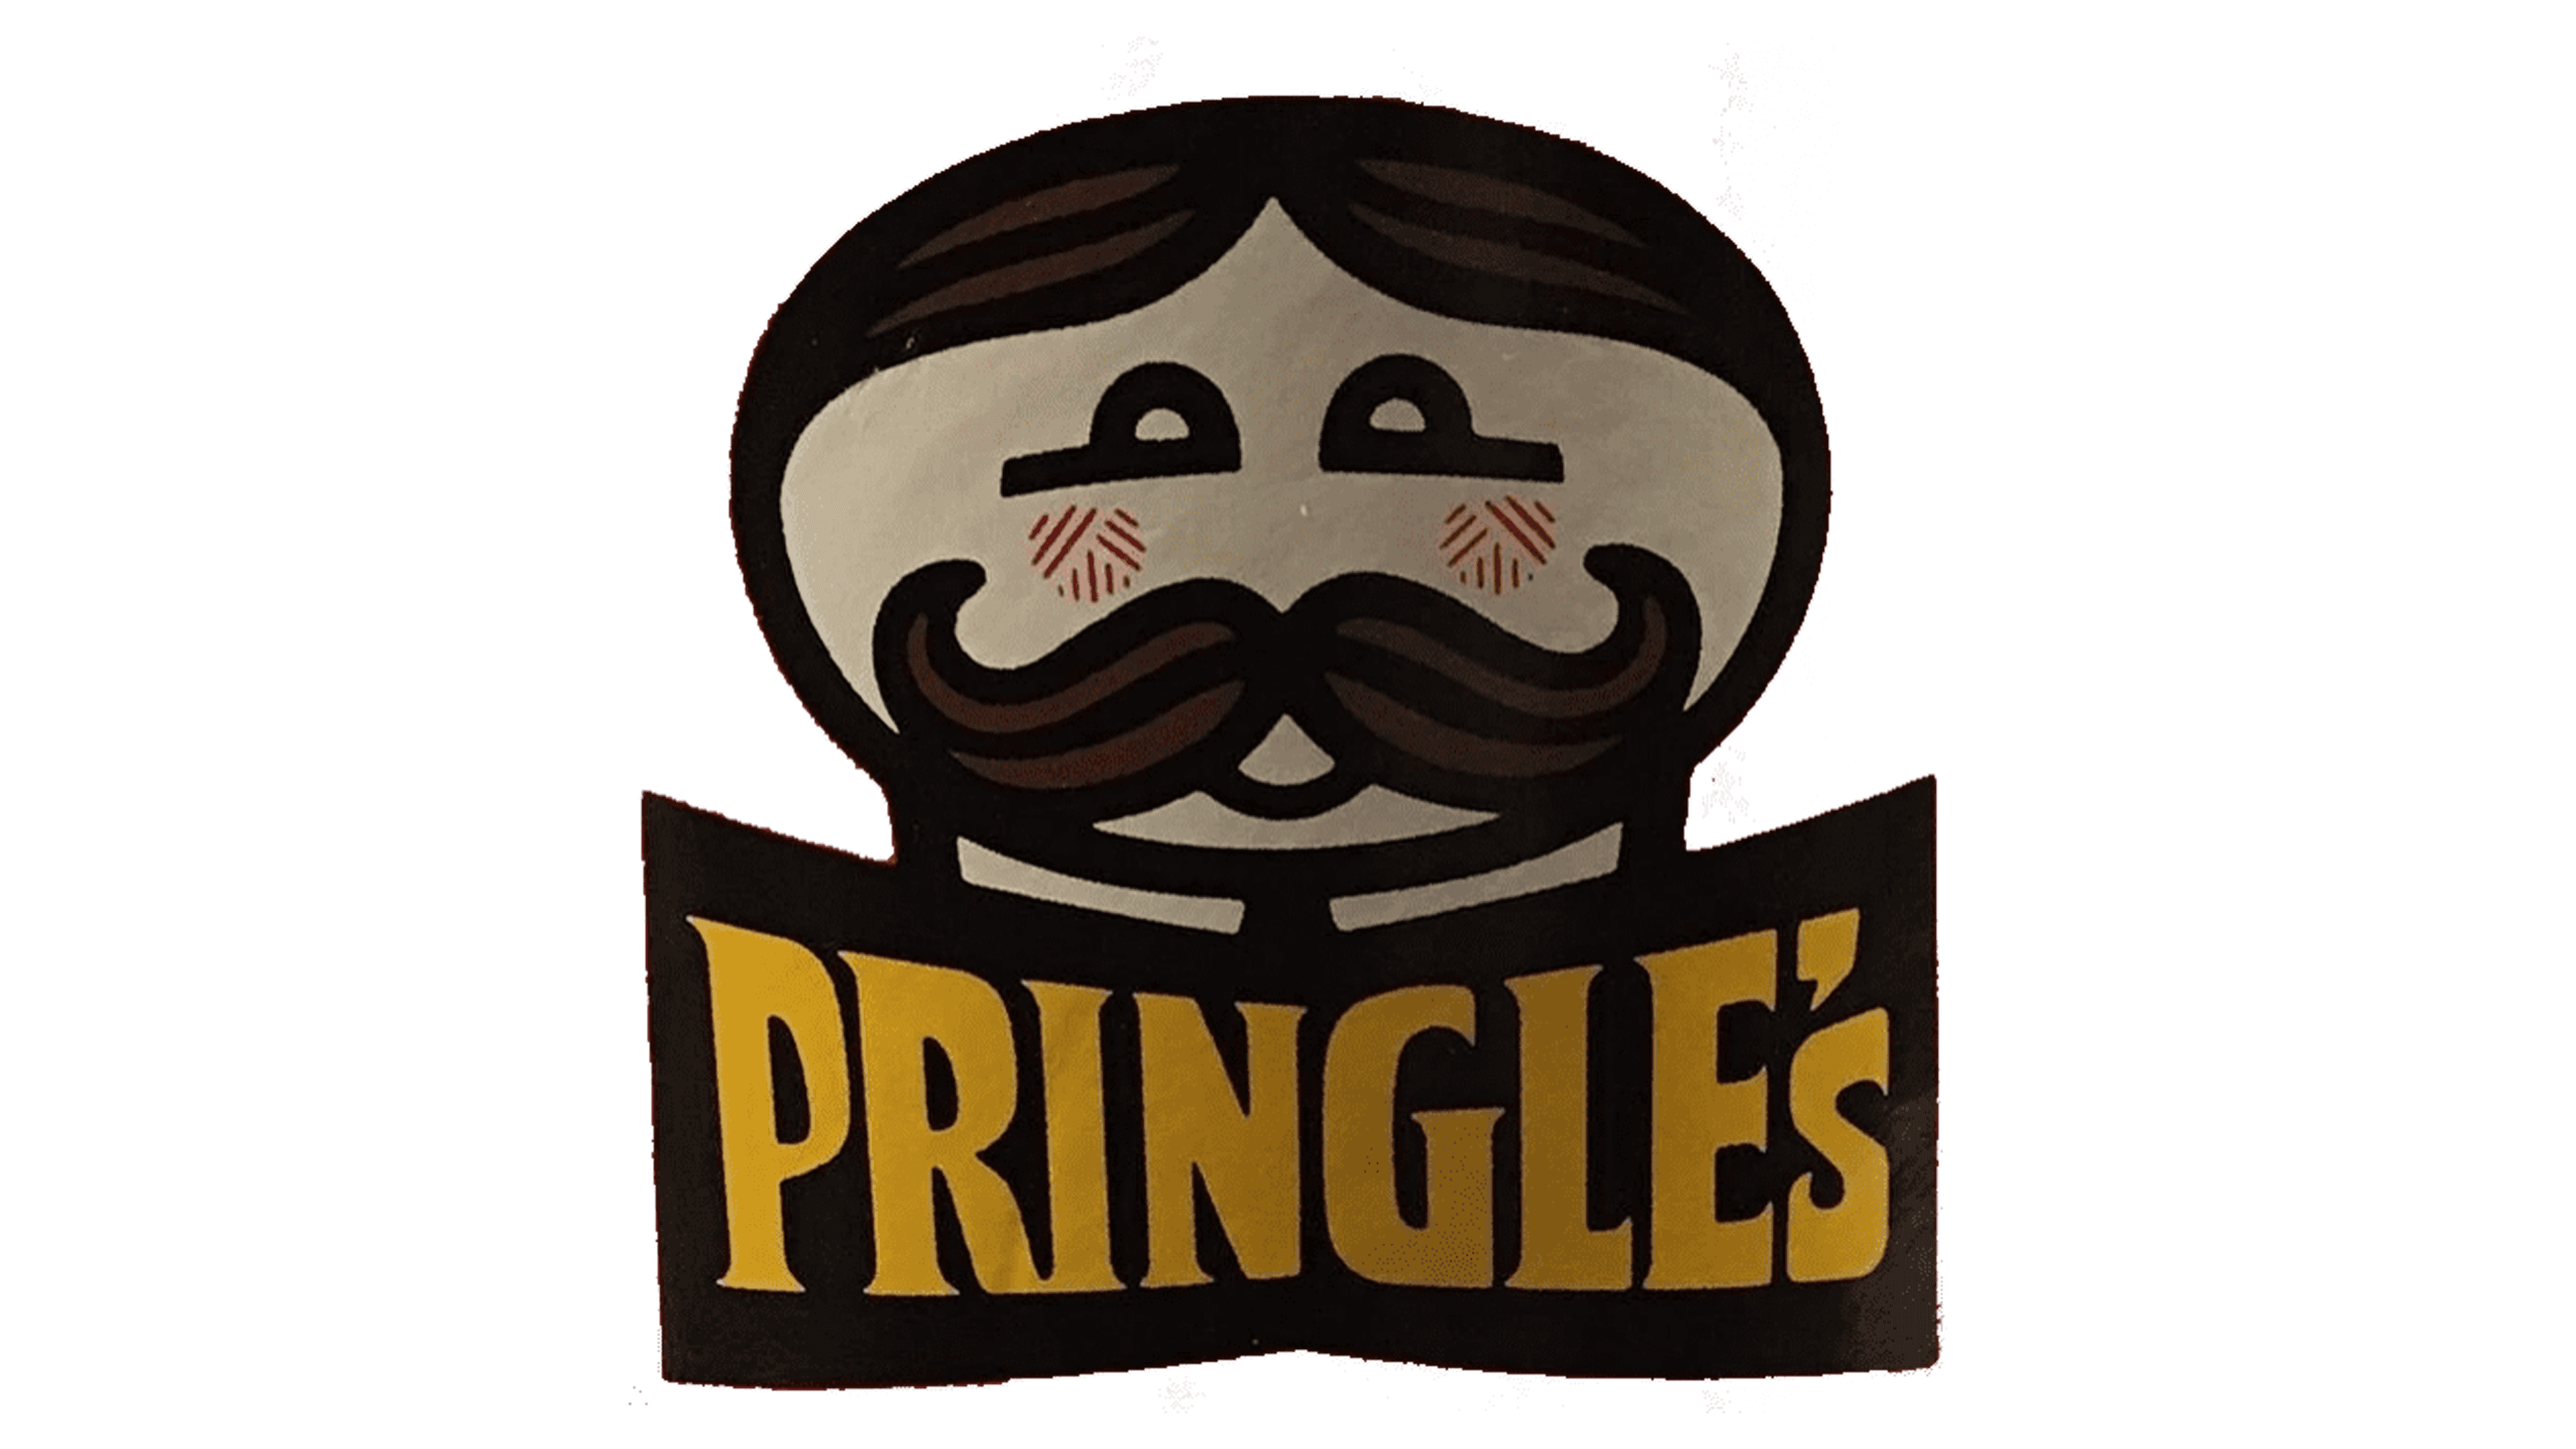 Pringles New Logo Youtube - vrogue.co